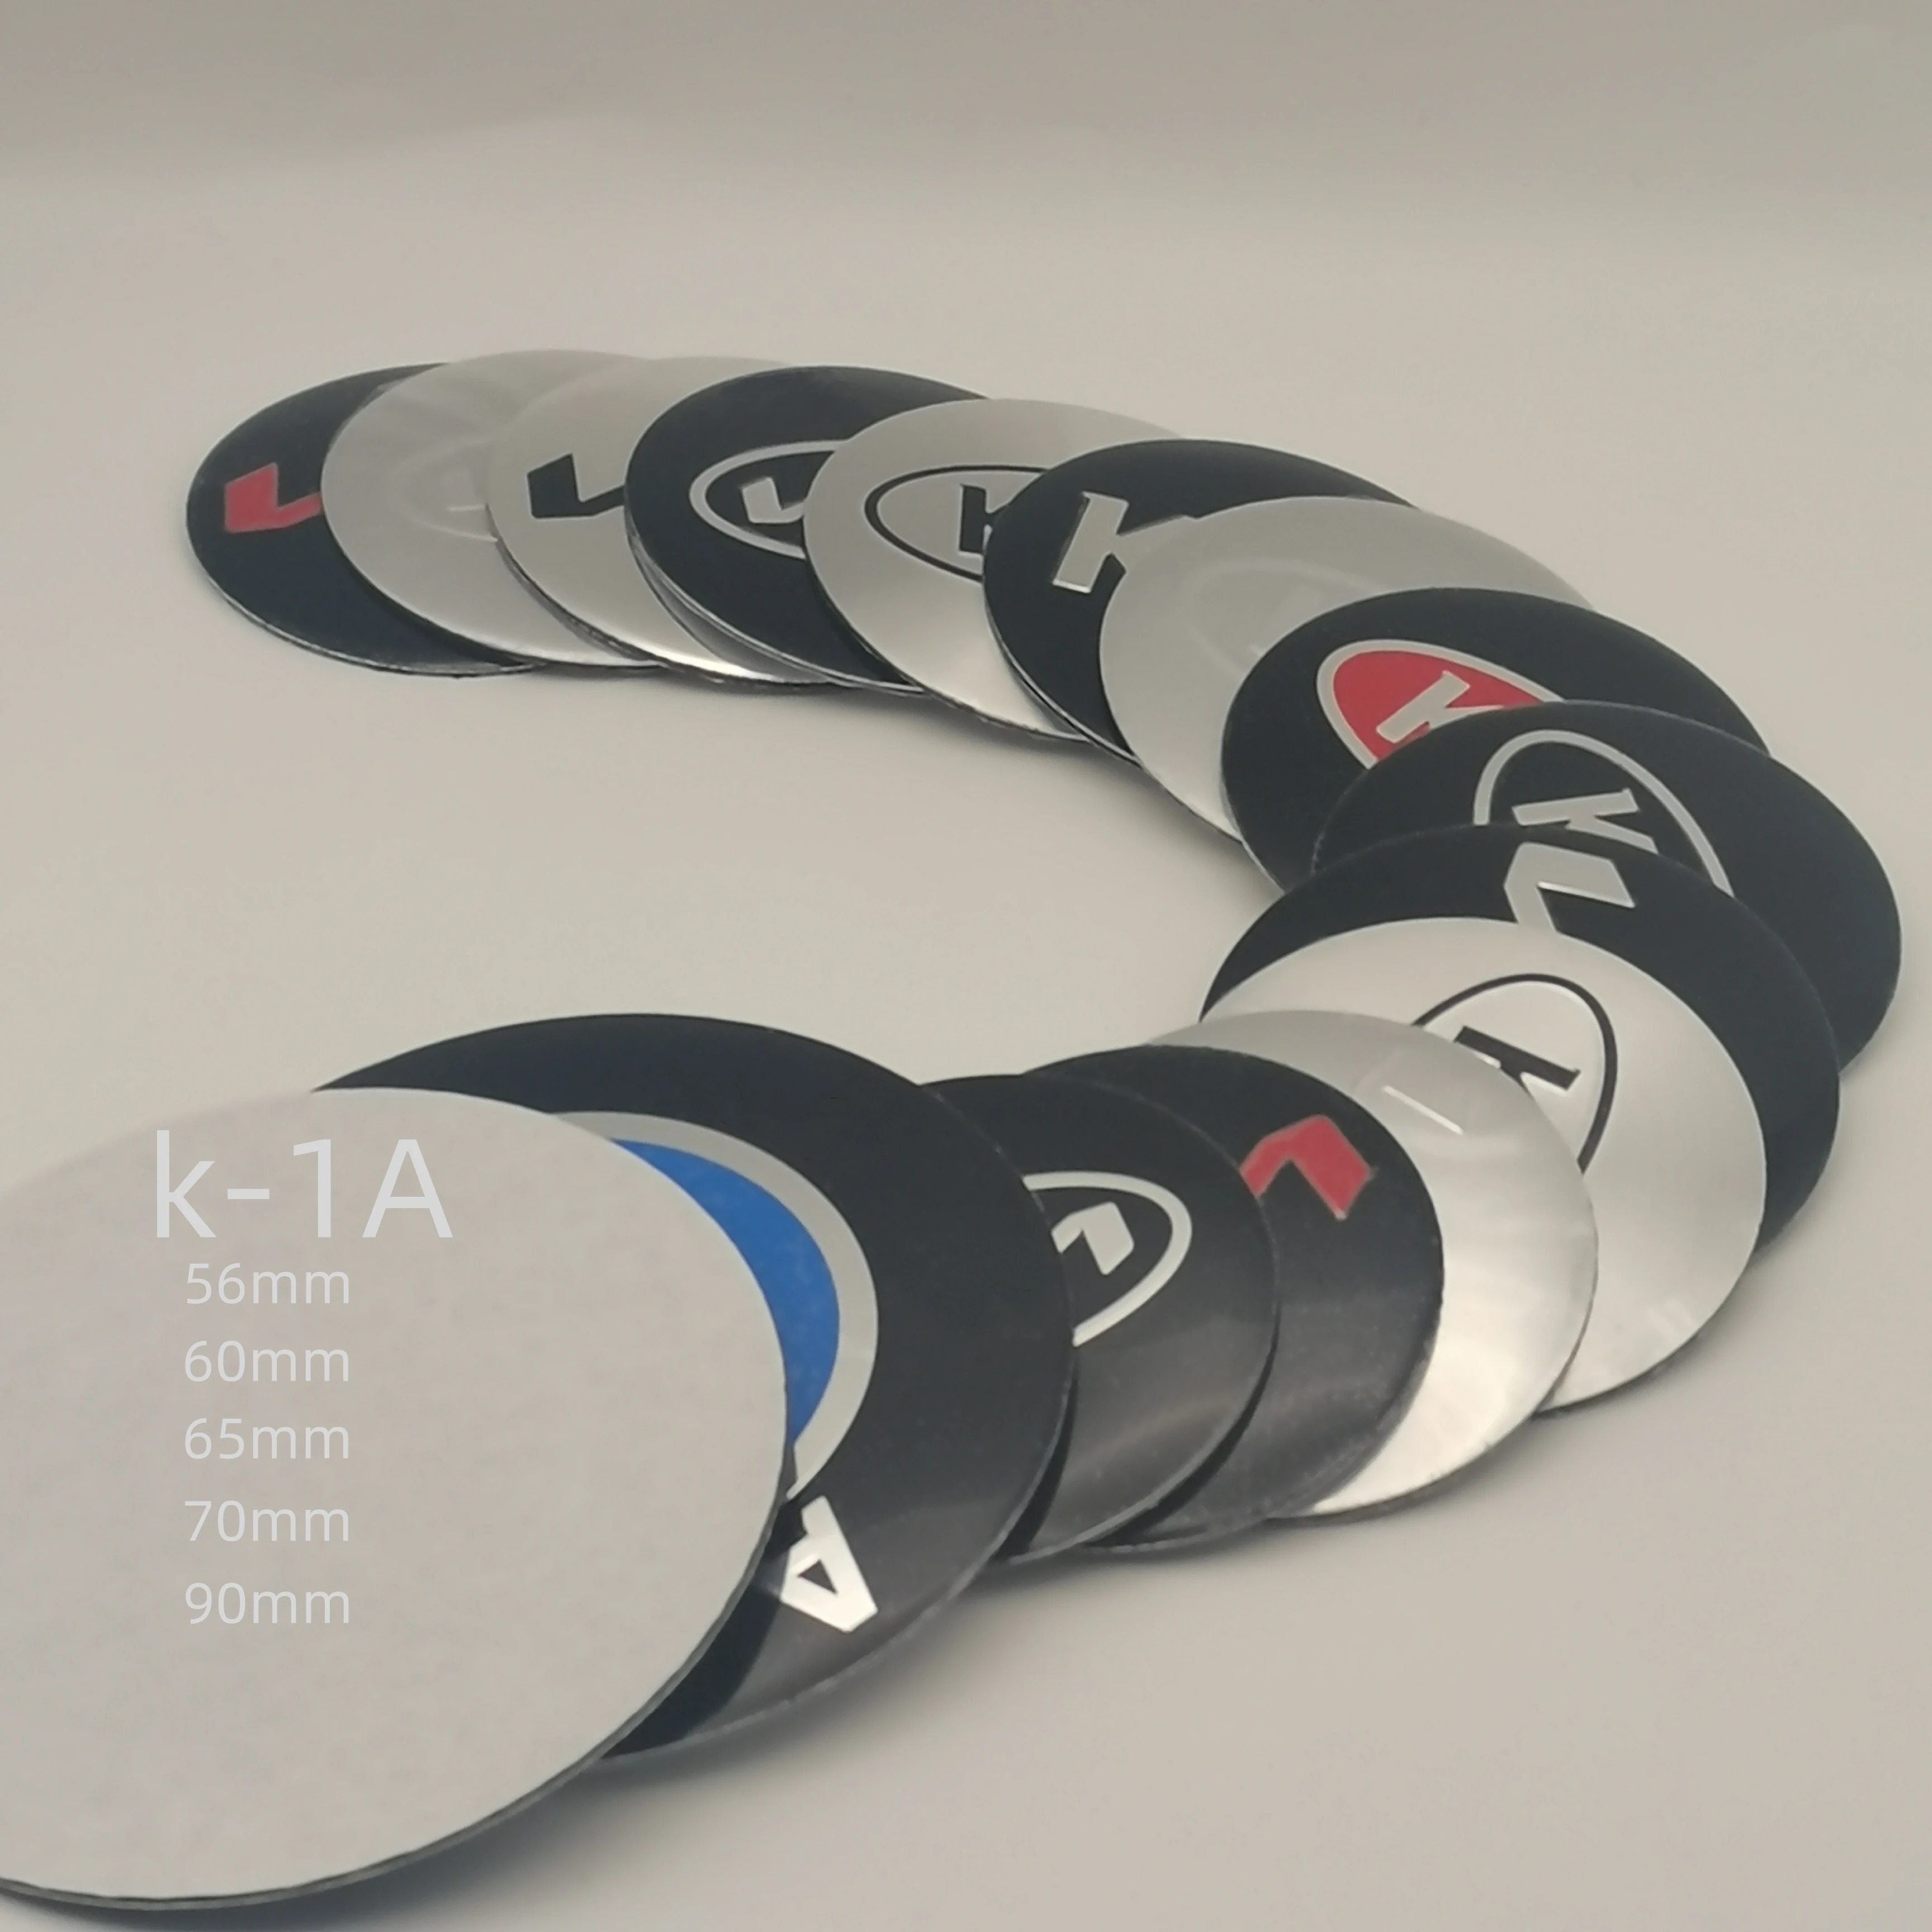 

For K-1a Forte Rio Optima K5 Sorento 4Pcs 56mm 60mm 65mm 70mm GT Stinger Car wheel center cover logo sticker